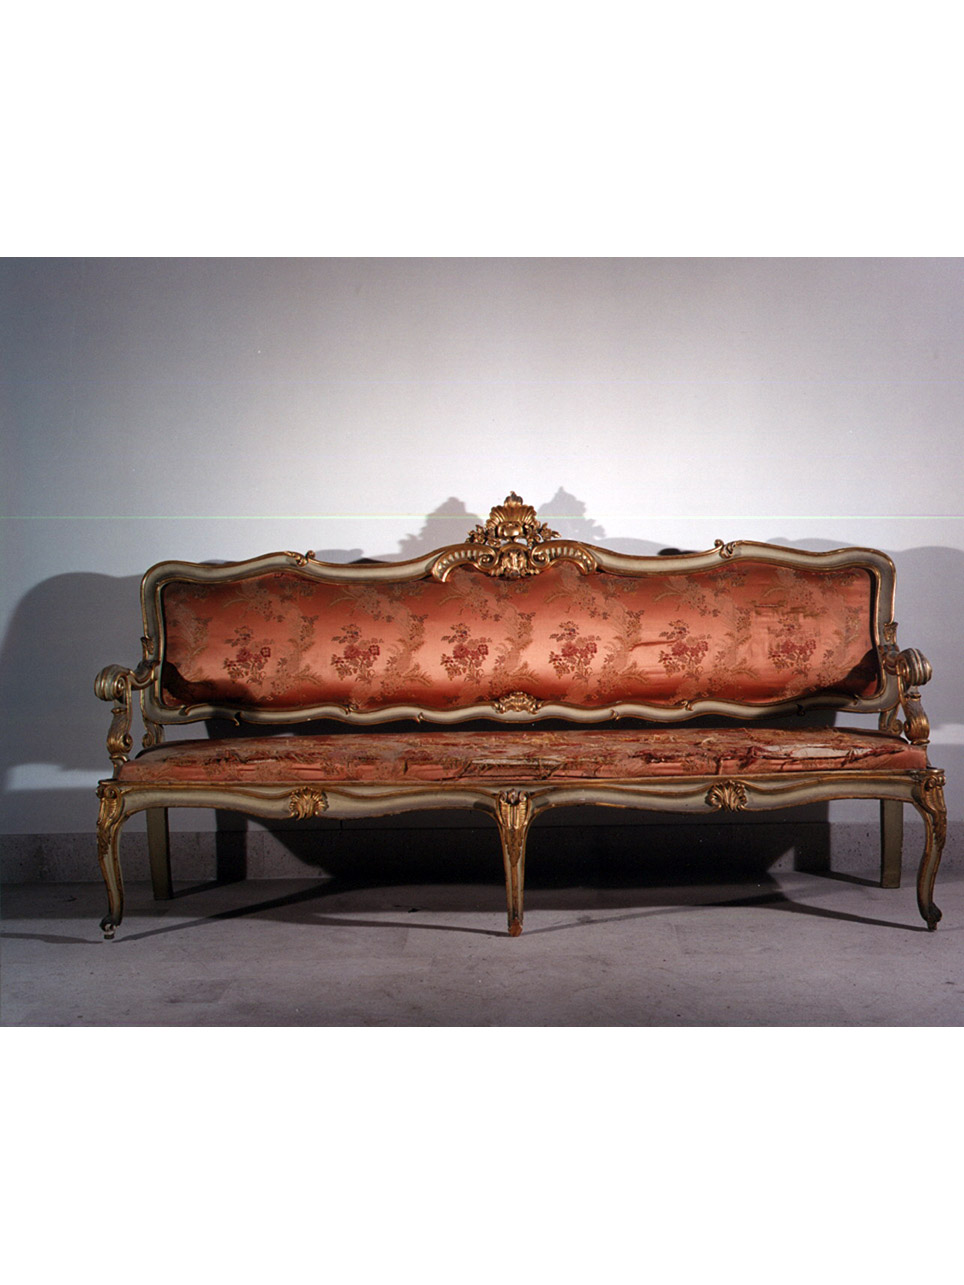 motivi decorativi floreali (divano) - bottega napoletana (ultimo quarto, metà sec. XIX, sec. XX)